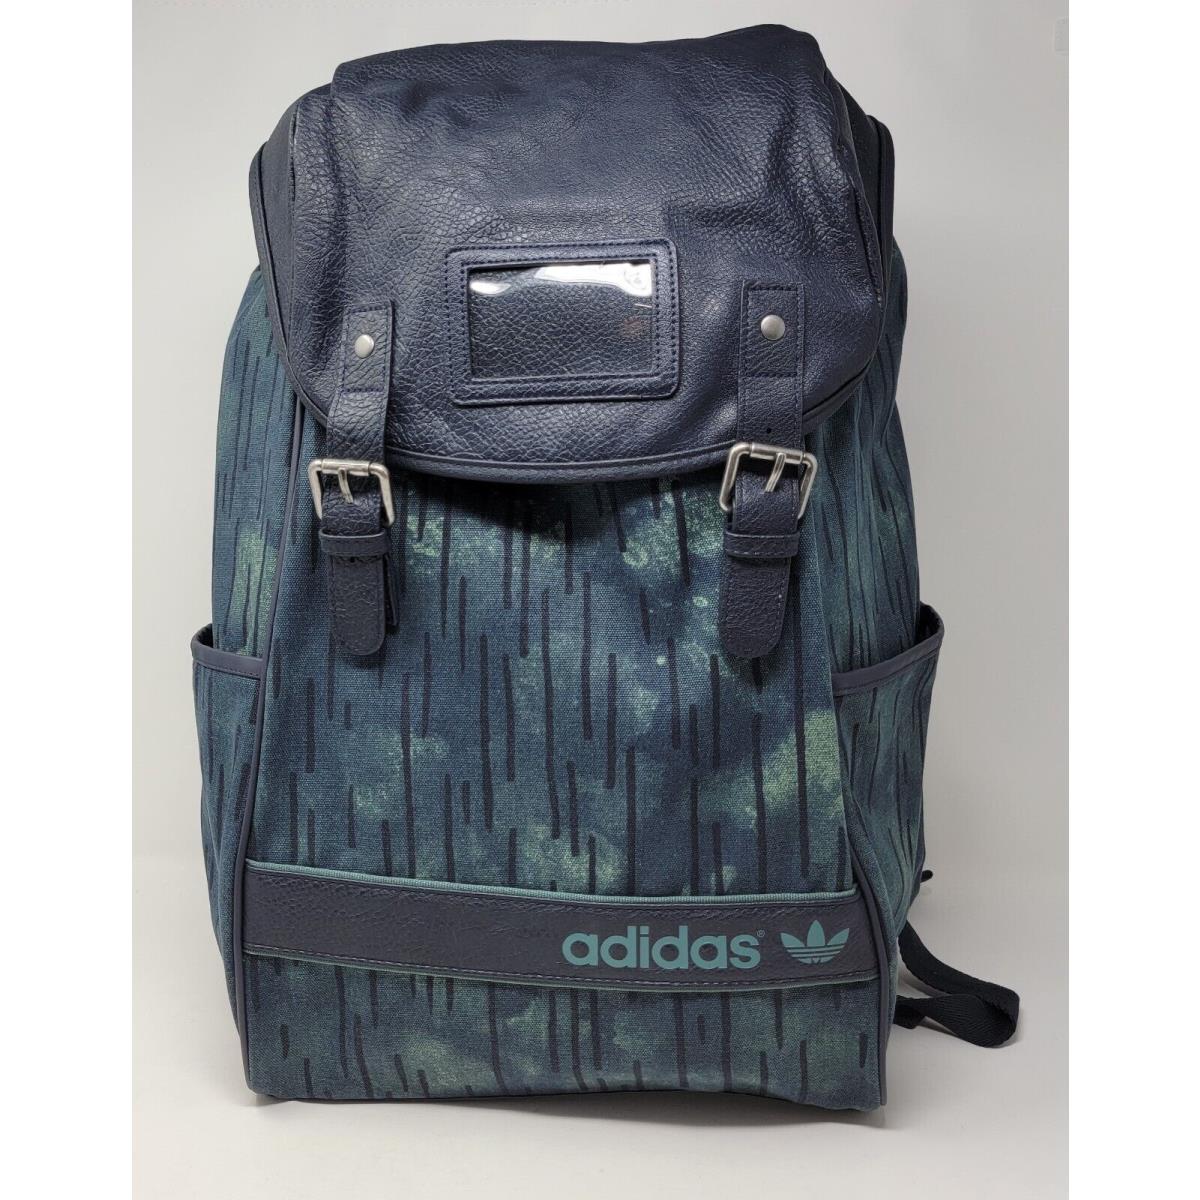 Adidas Legink Blue Tie Canvas Backpack F79489 - Adidas bag - | Fash Brands